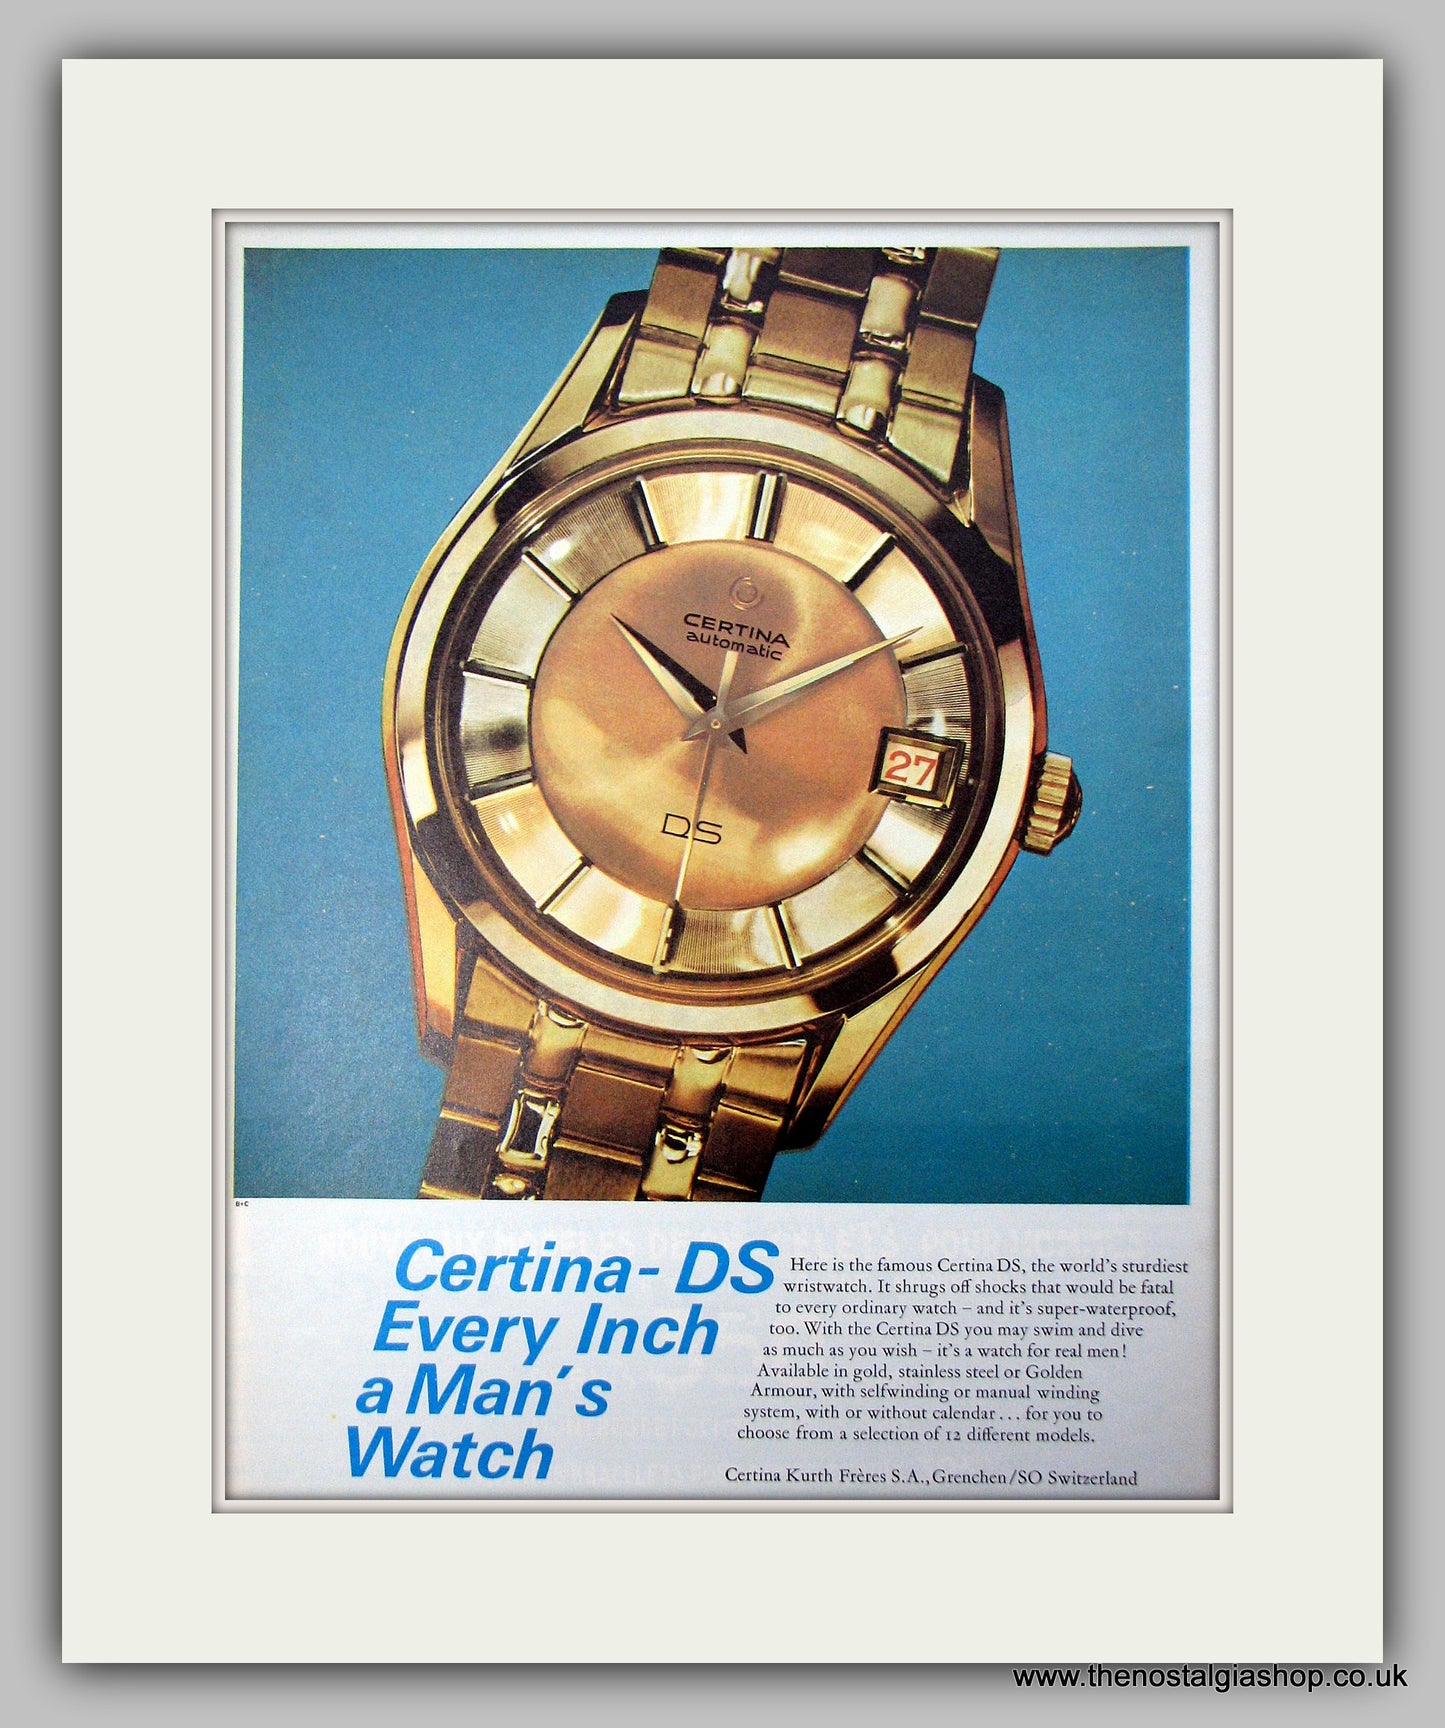 Certina-DS Watch Original Advert 1964 (ref AD9468)